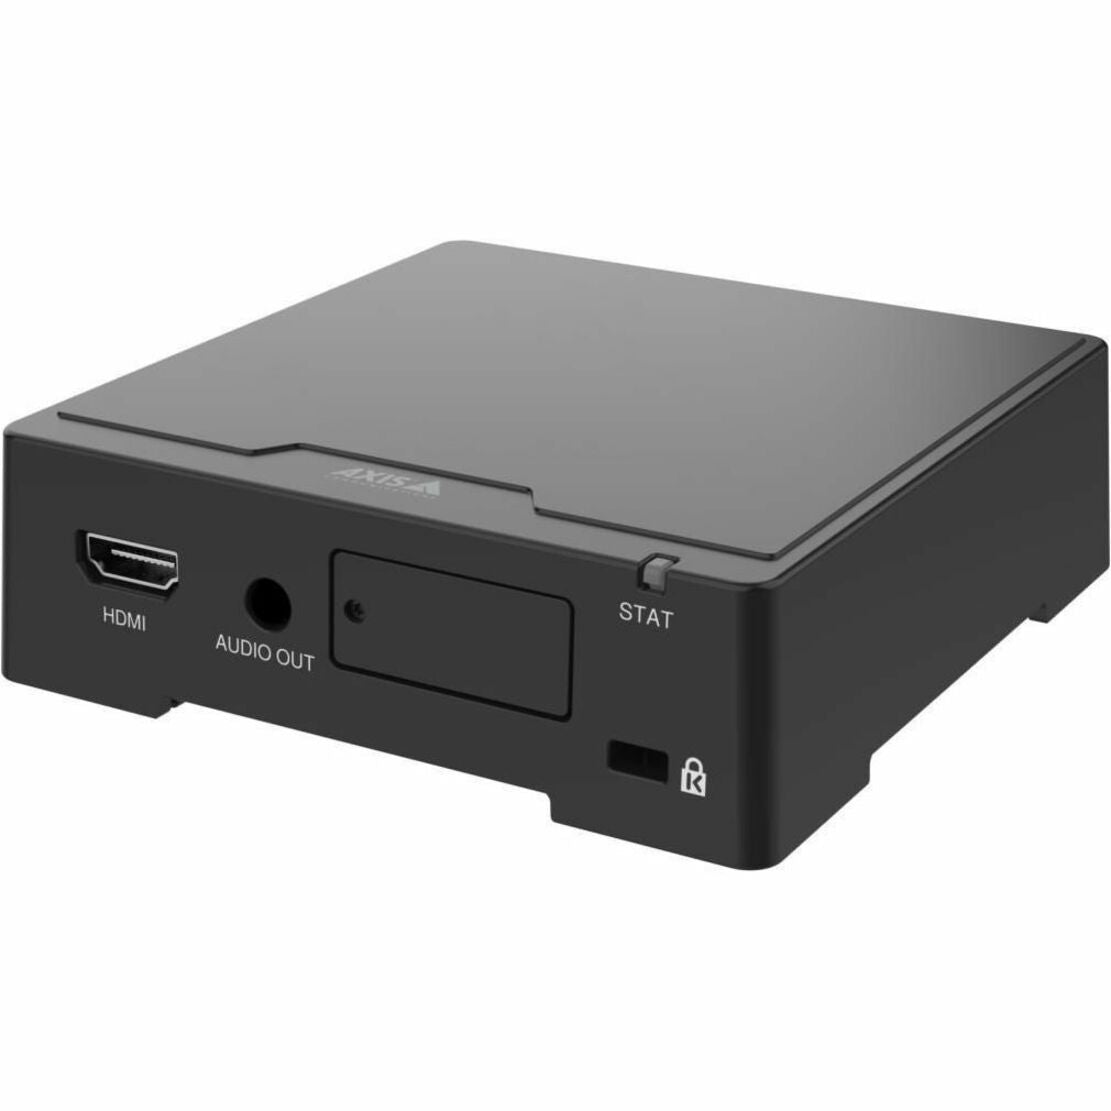 AXIS 02282-001 D1110 محول فيديو 4K ، وحدة معالجة / التقاط الفيديو مع واجهات USB ، HDMI ، الصوت الخارجي ، والشبكة (RJ-45) العلامة التجارية: AXIS